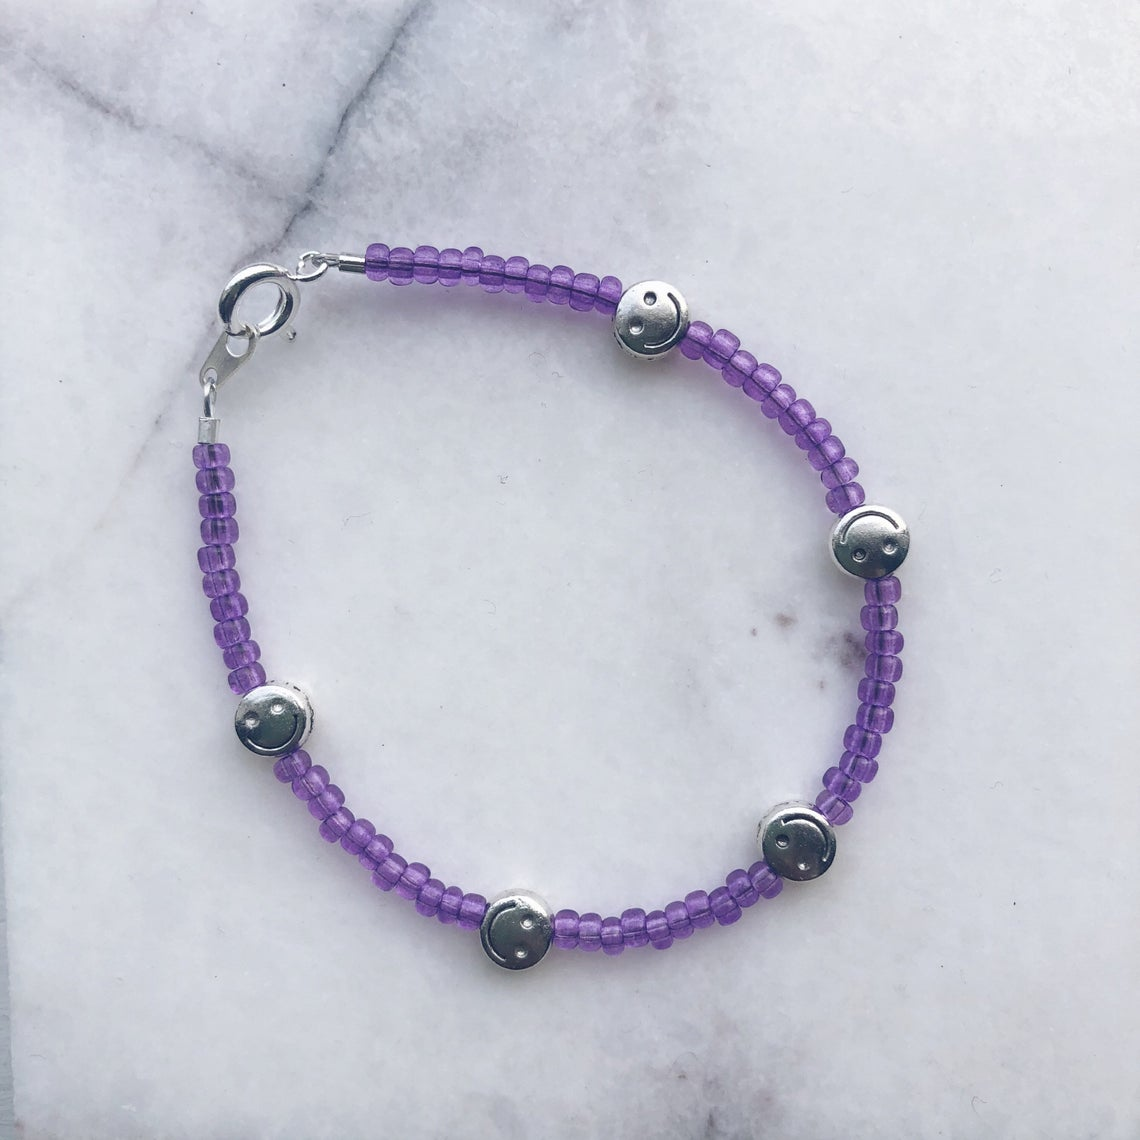 Made By Frankie + Lavender Beaded Bracelet